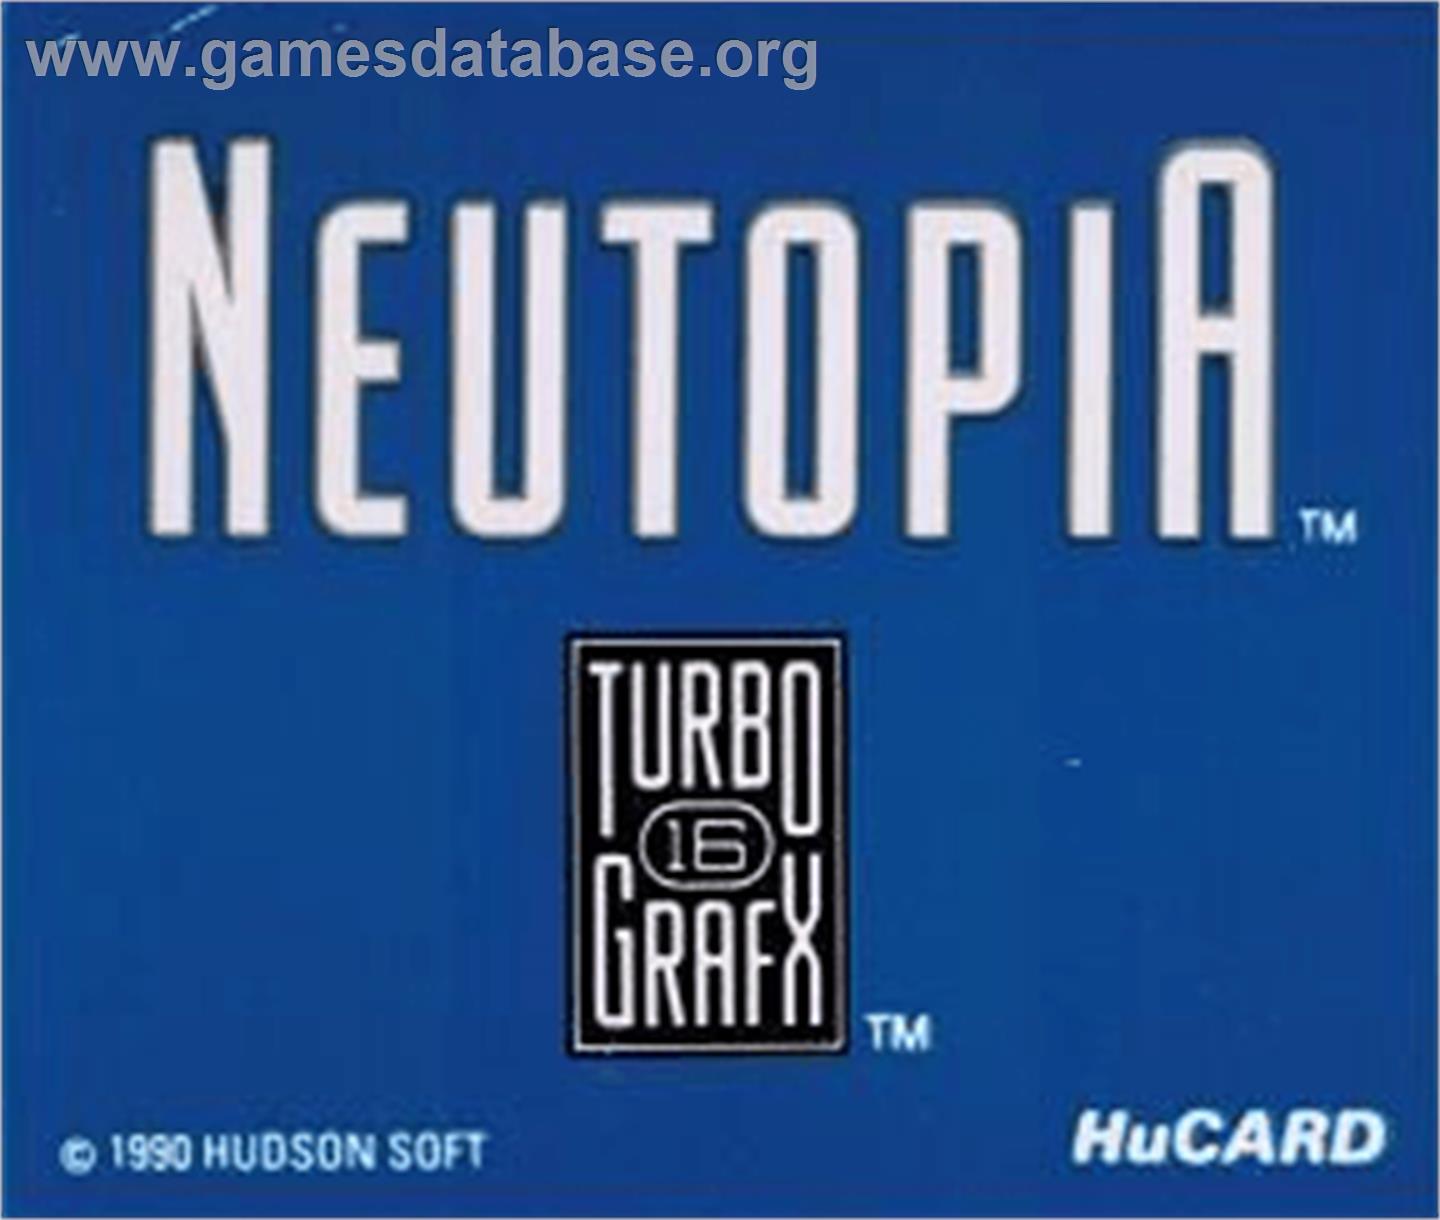 Neutopia - NEC TurboGrafx-16 - Artwork - Cartridge Top